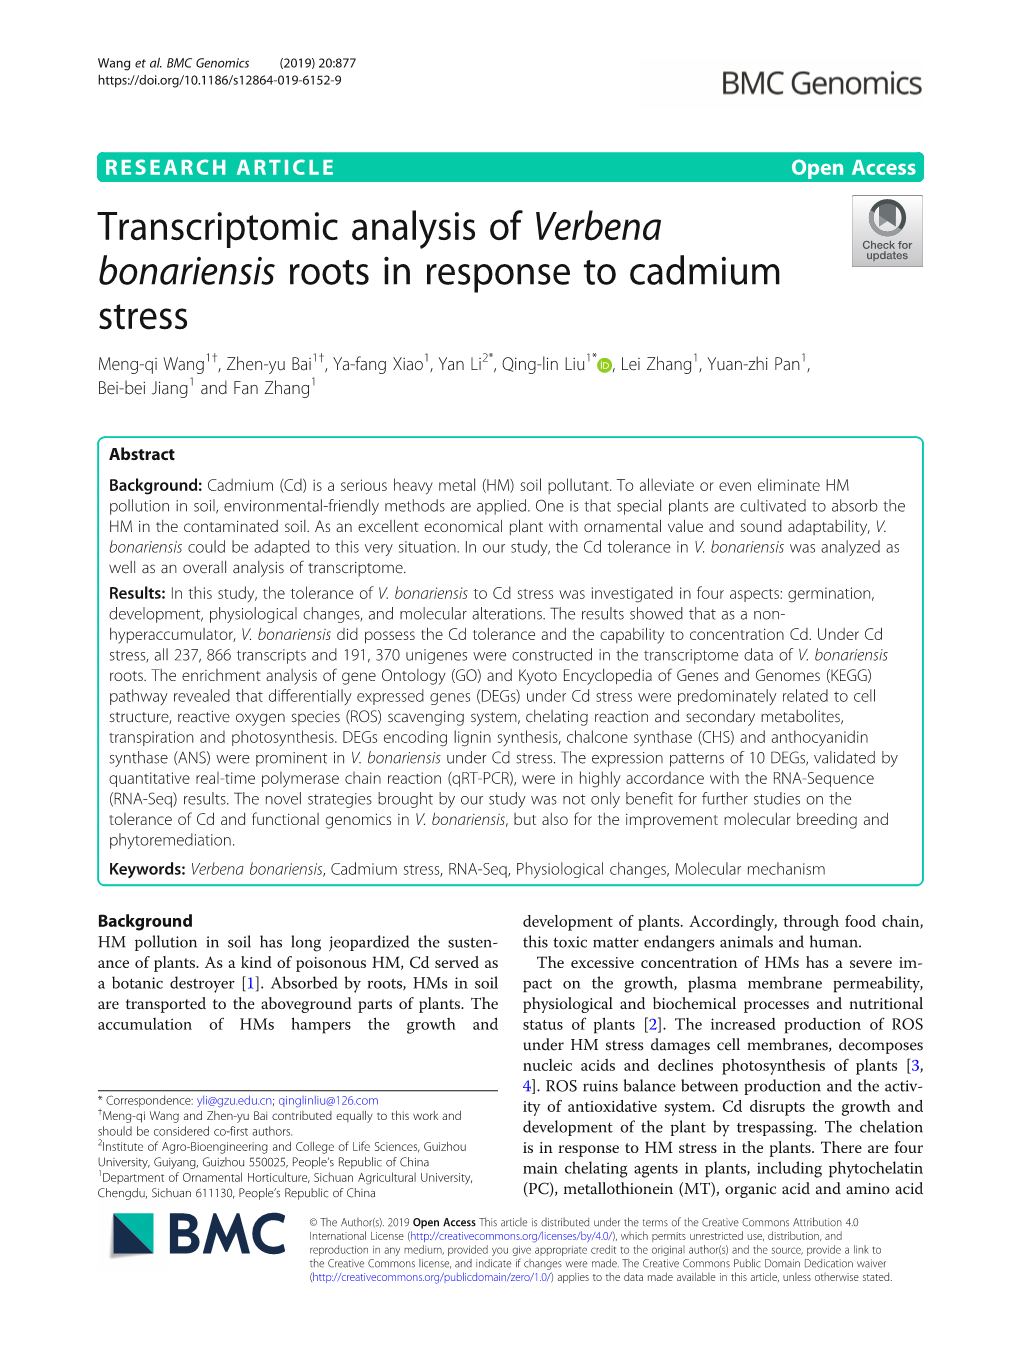 Transcriptomic Analysis of Verbena Bonariensis Roots in Response to Cadmium Stress